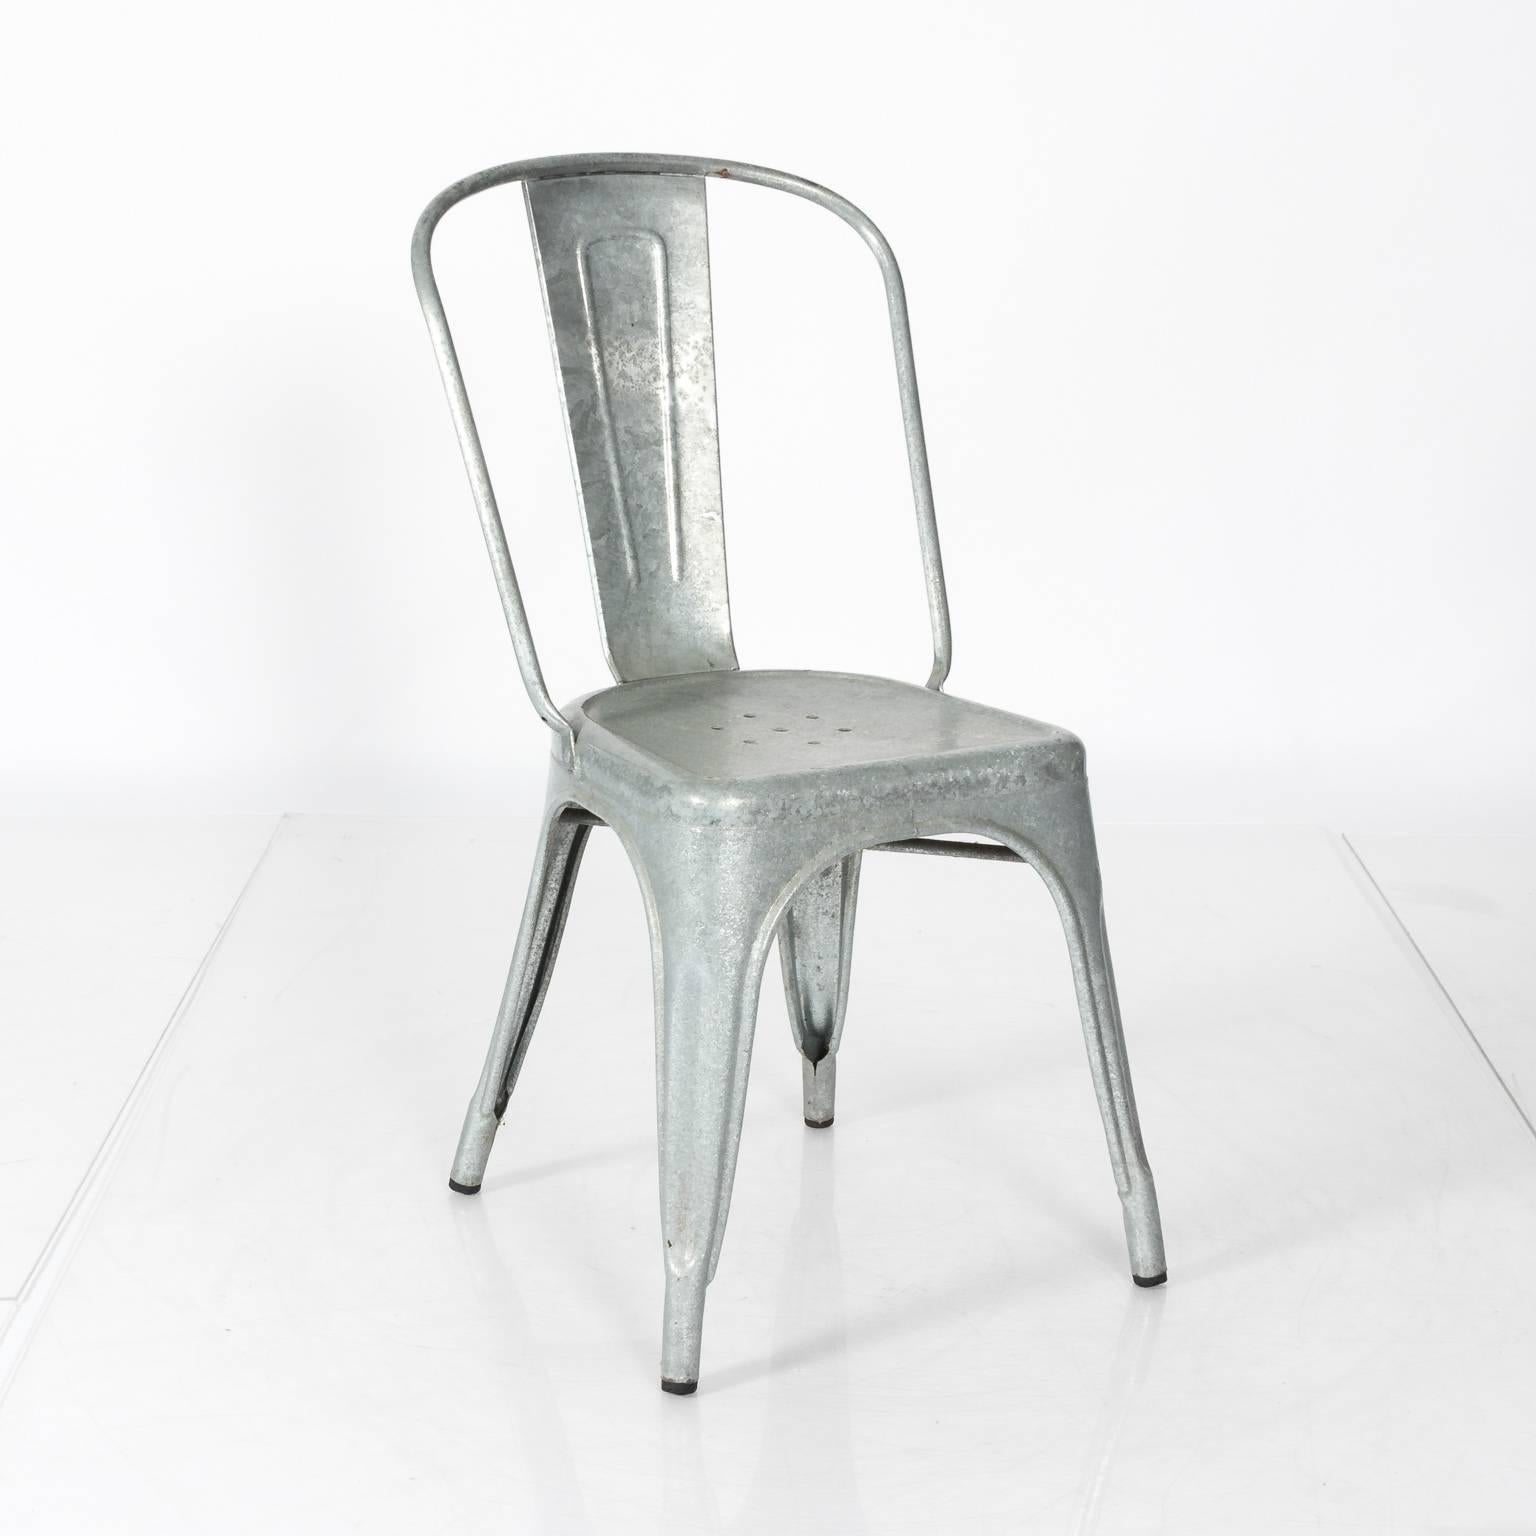 Pair of Industrial silver metal chairs.
   